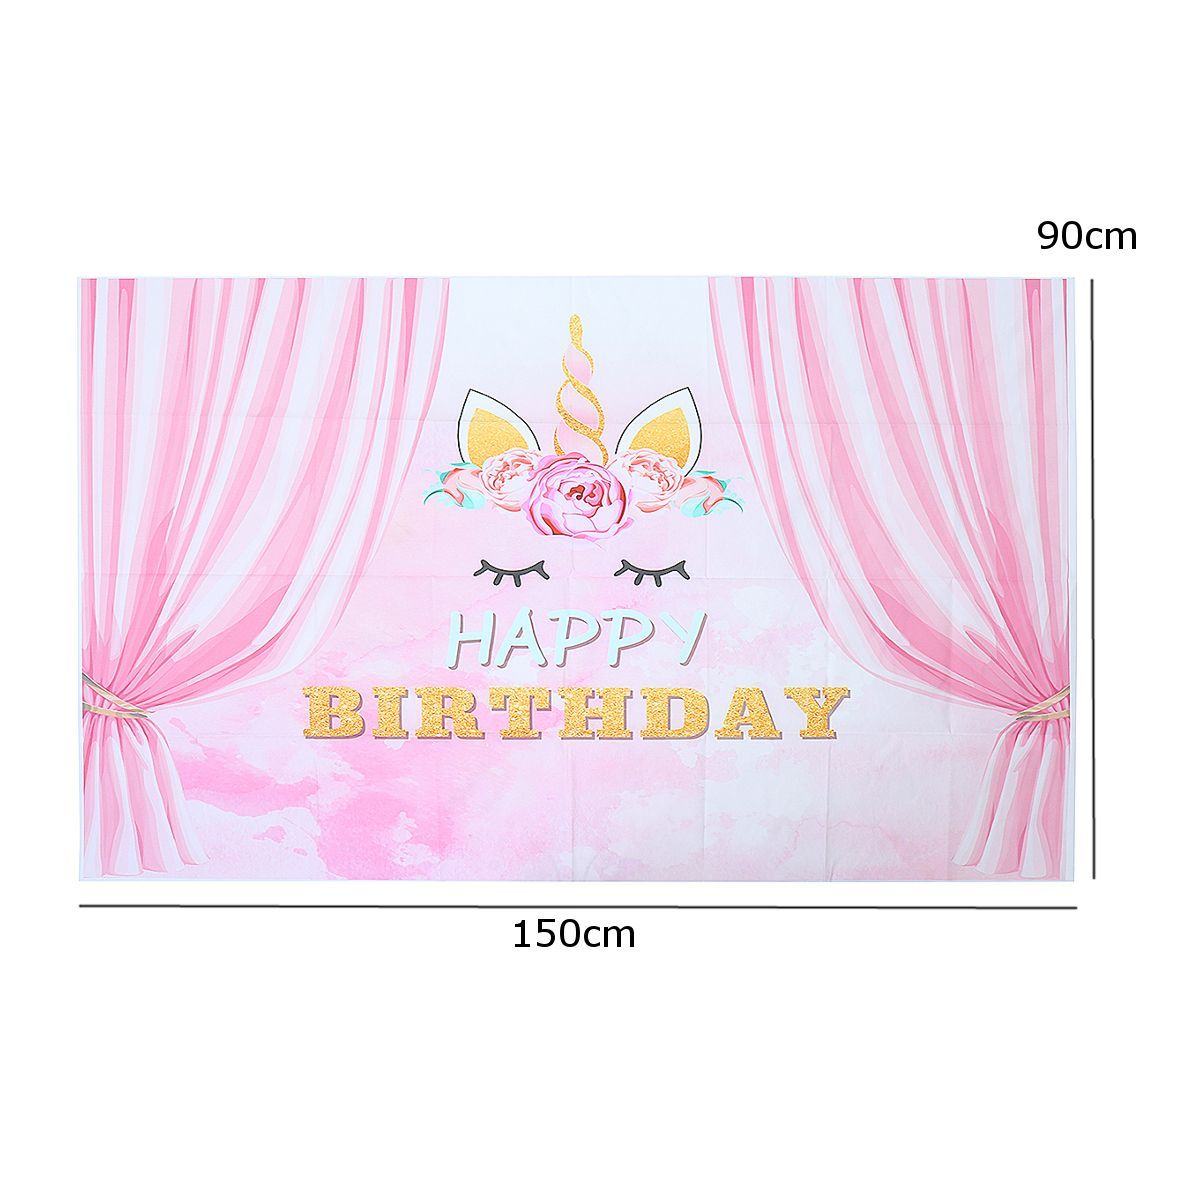 5x3FT-Pink-Curtain-Unicorn-Birthday-Theme-Photography-Backdrop-Studio-Prop-Background-1402326